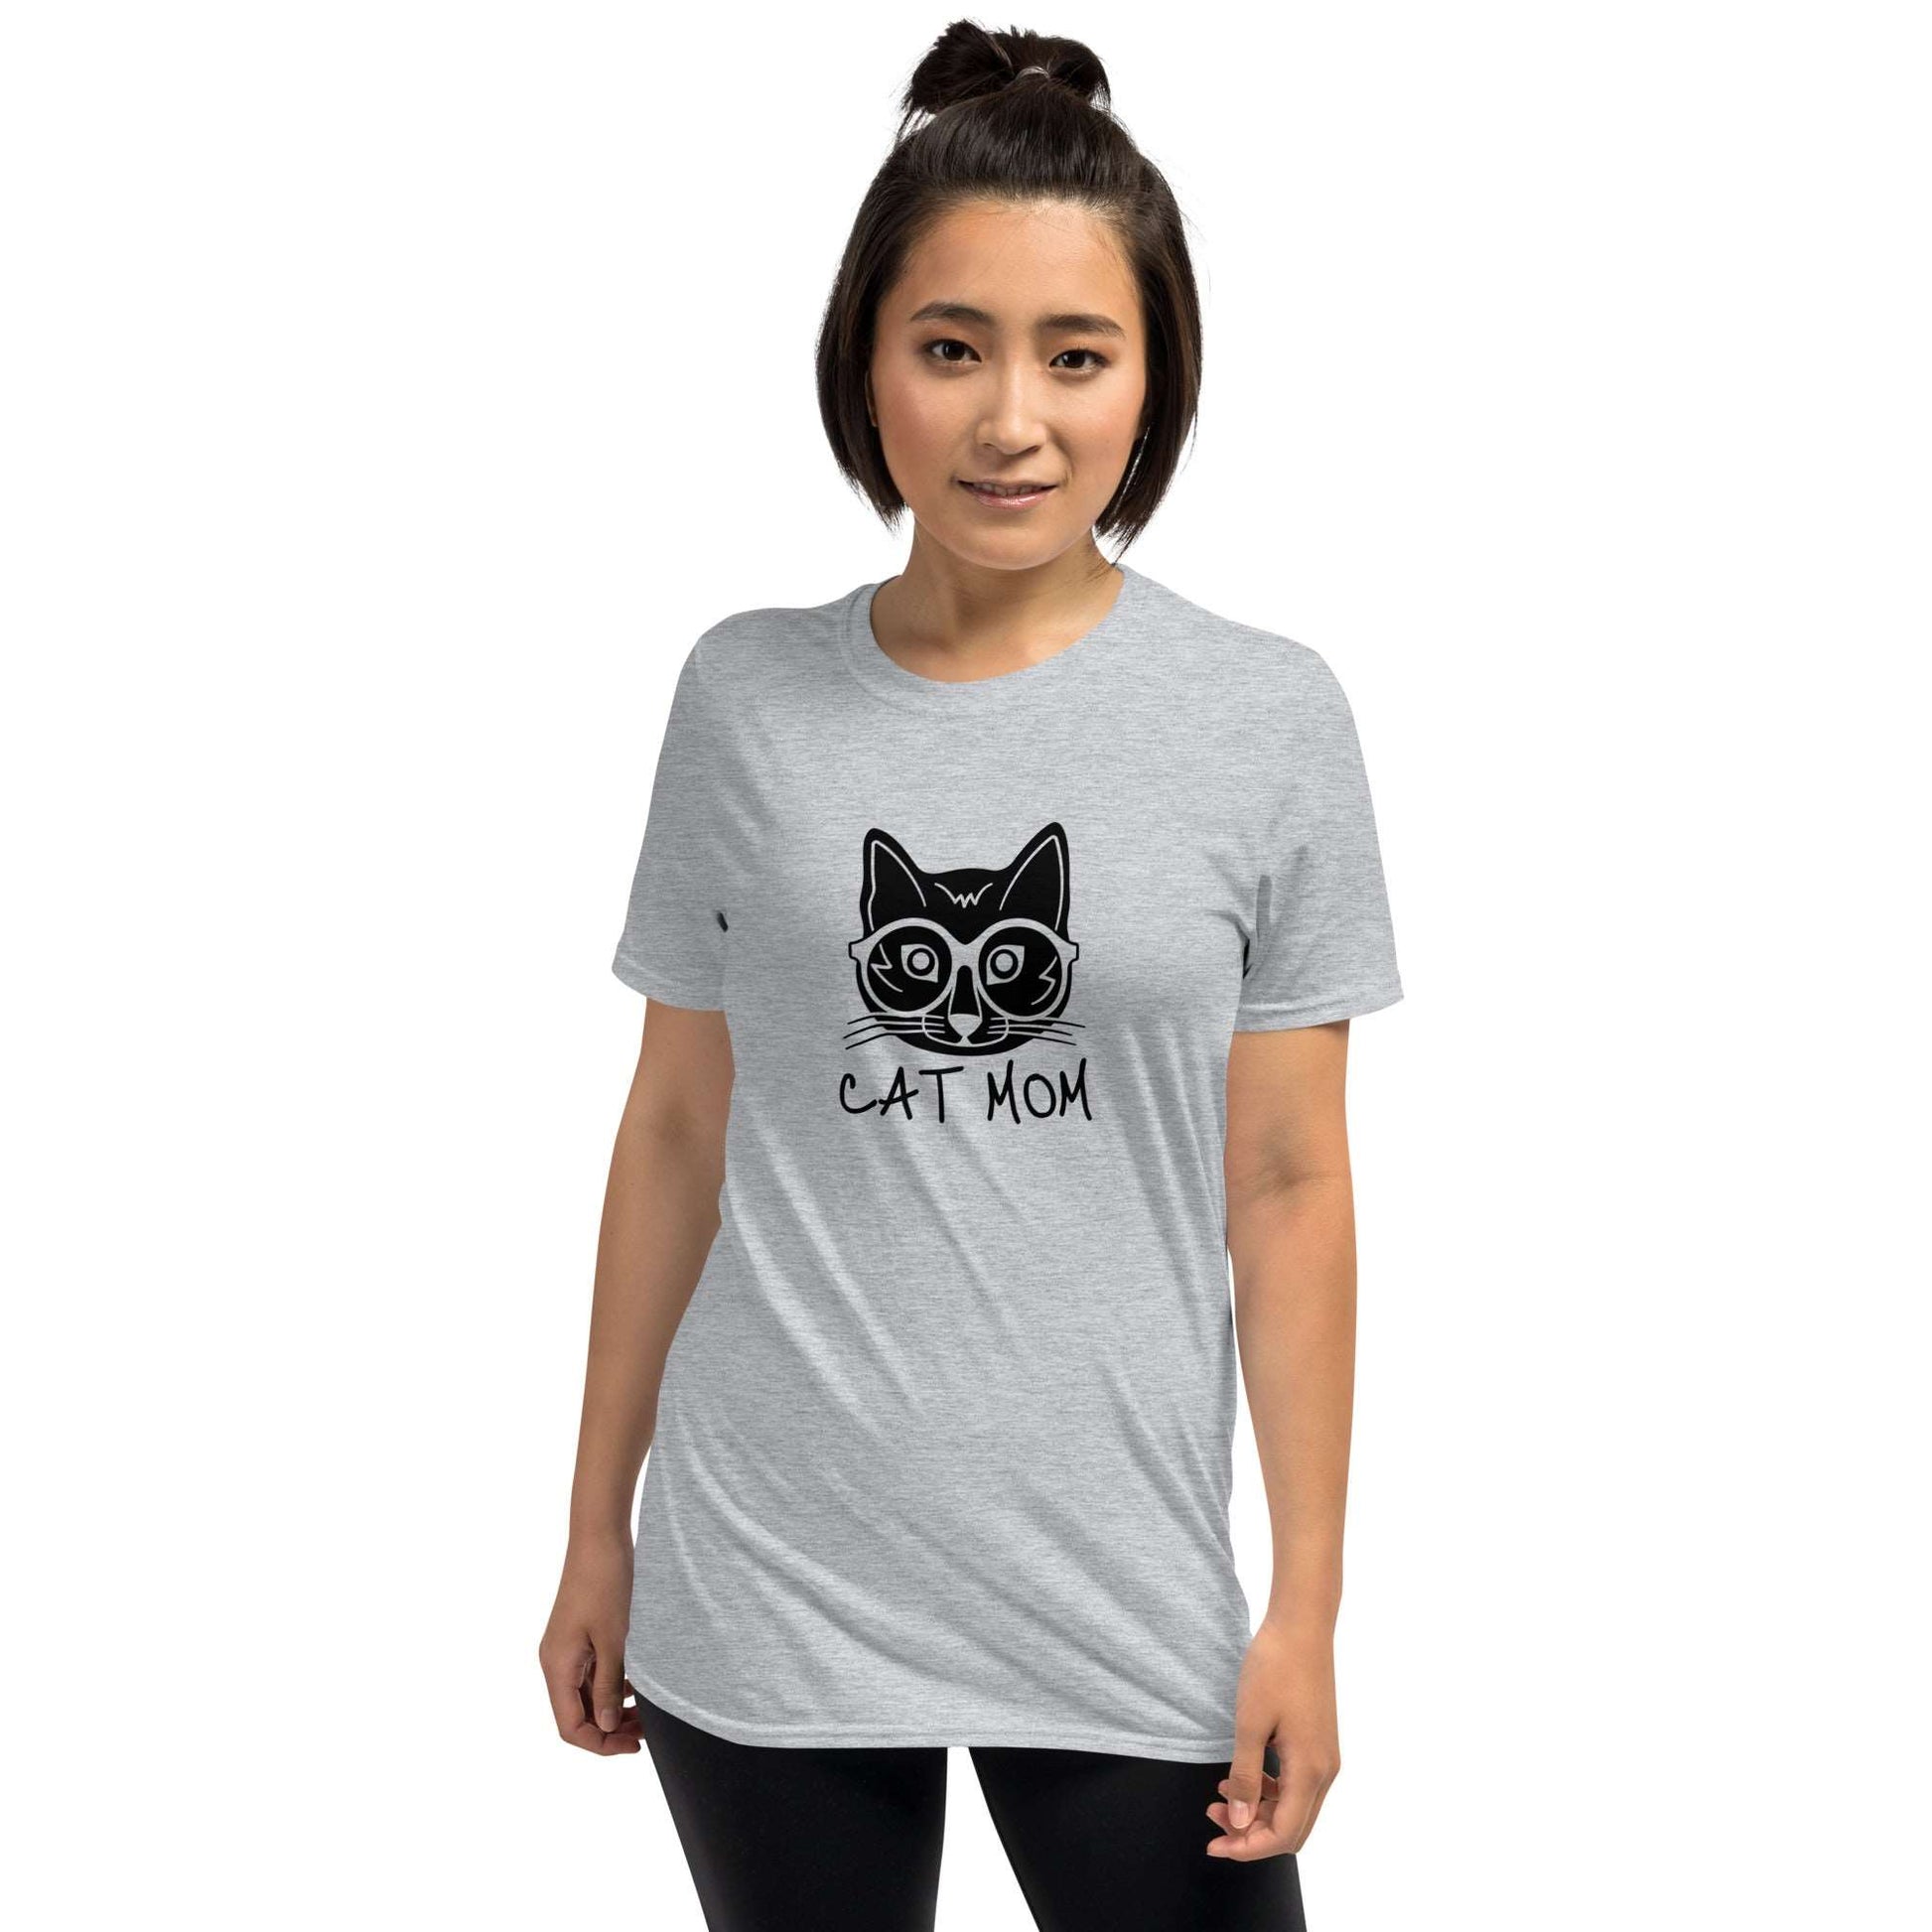 Cat Mom Unisex Softstyle Short-Sleeve T-Shirt TeeSpect